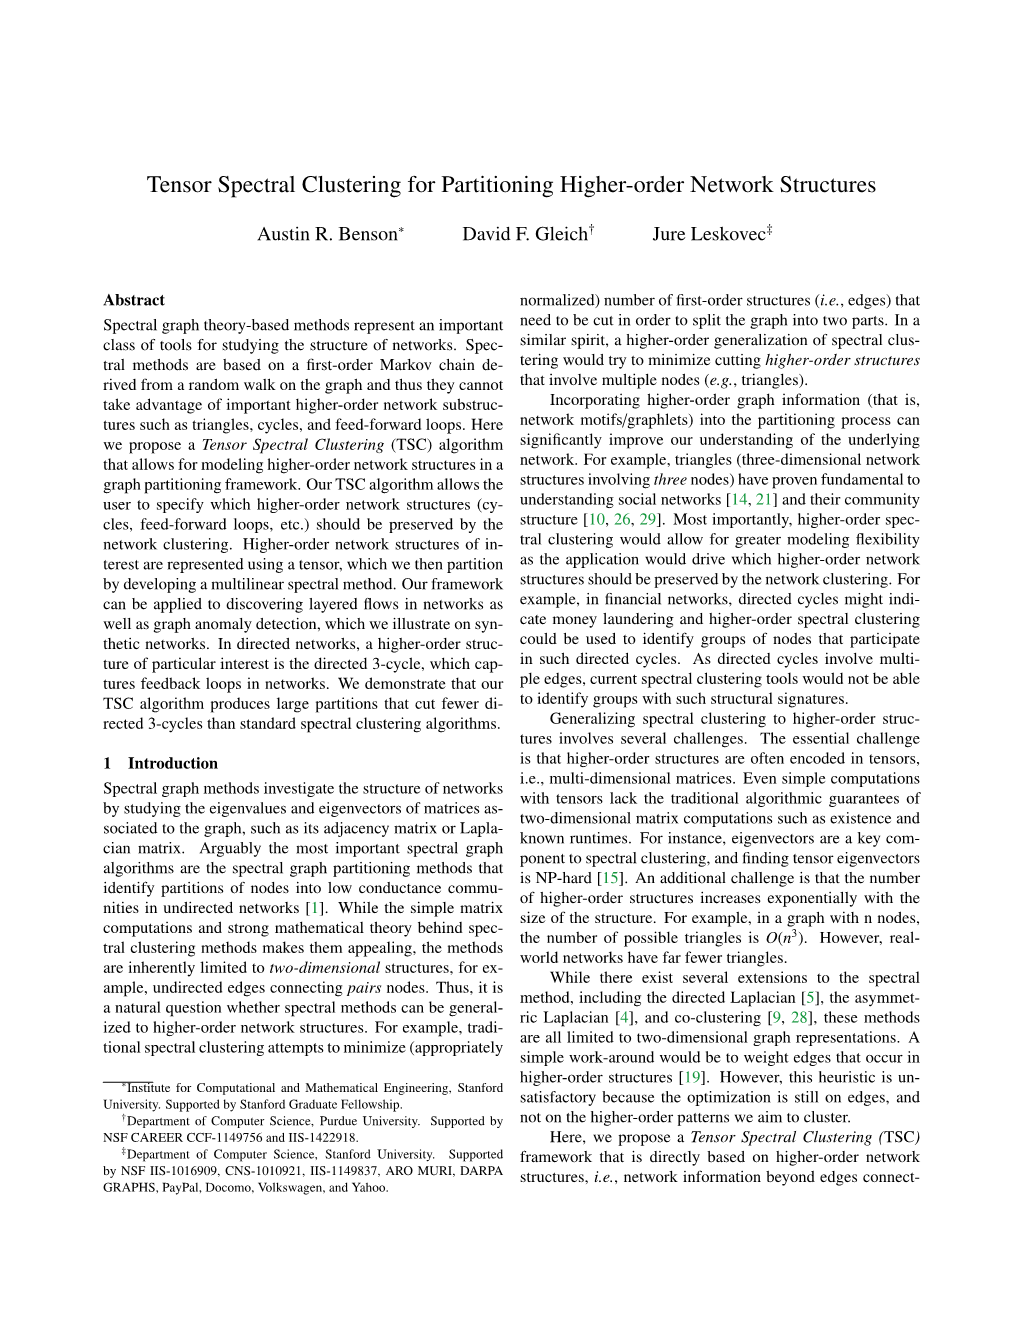 Tensor Spectral Clustering for Partitioning Higher-Order Network Structures